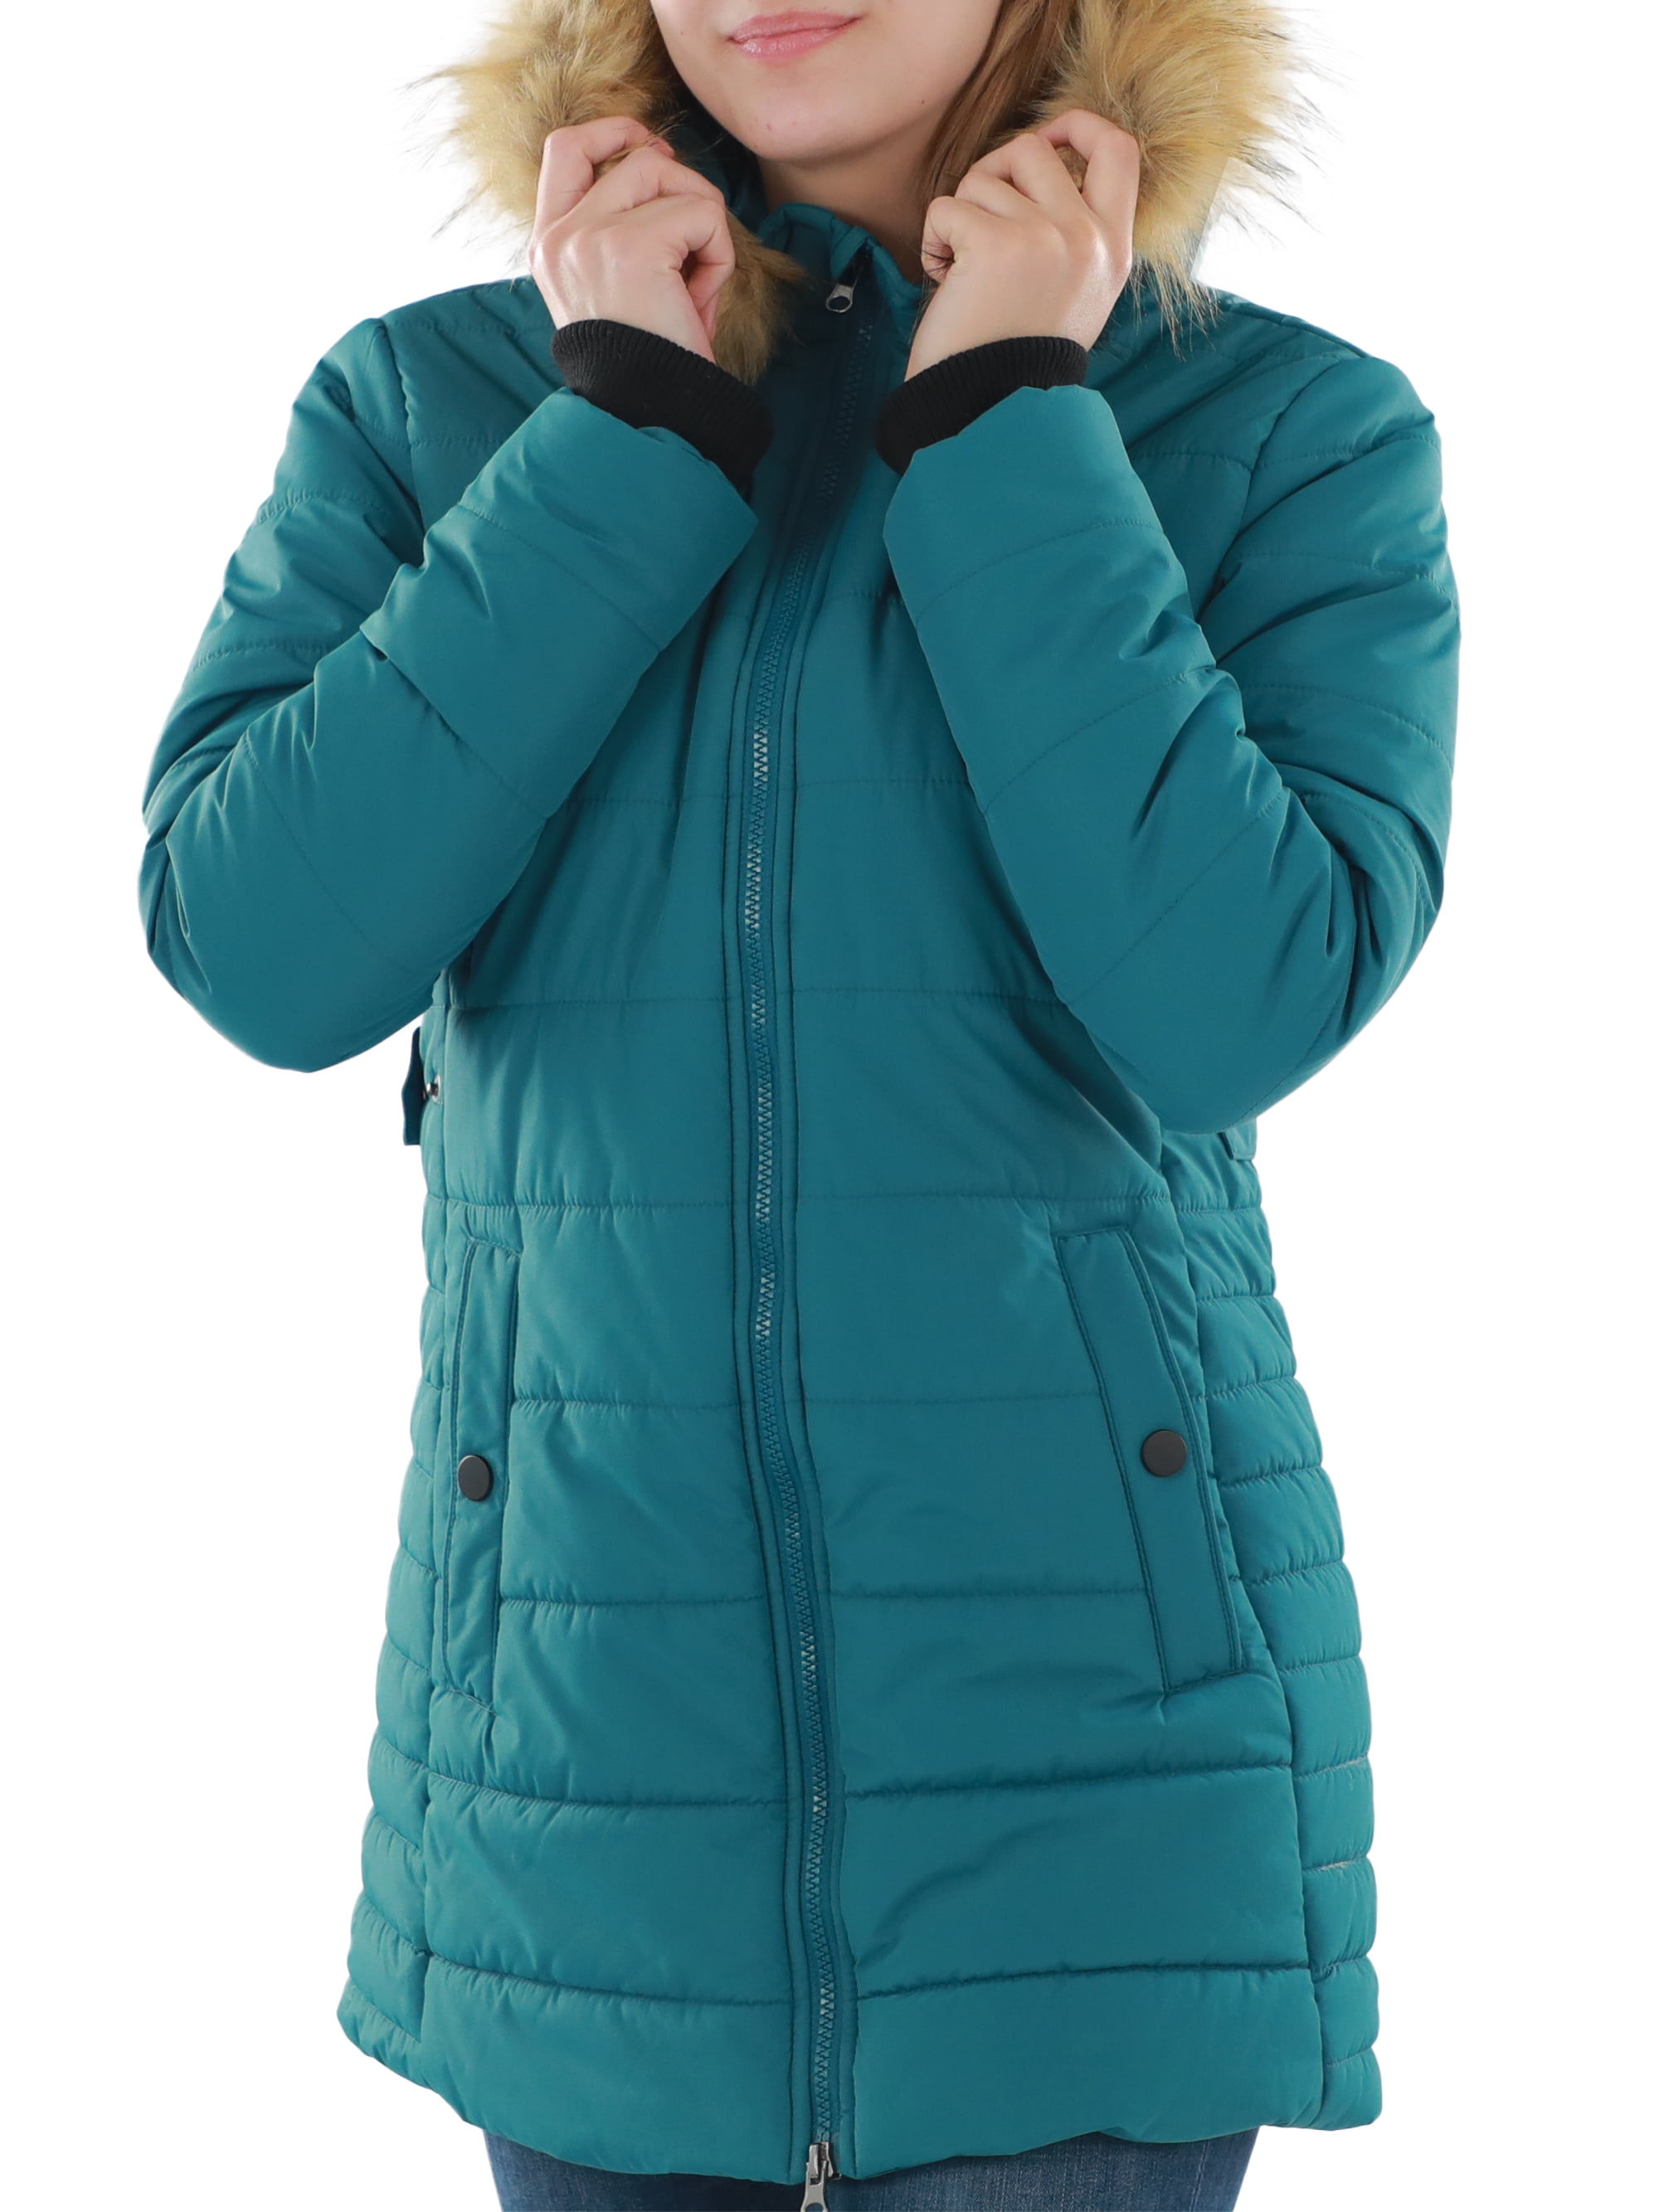 Wantdo Women's Quilted Winter Coats Hooded Warm Puffer Jacket with Fleece Hood